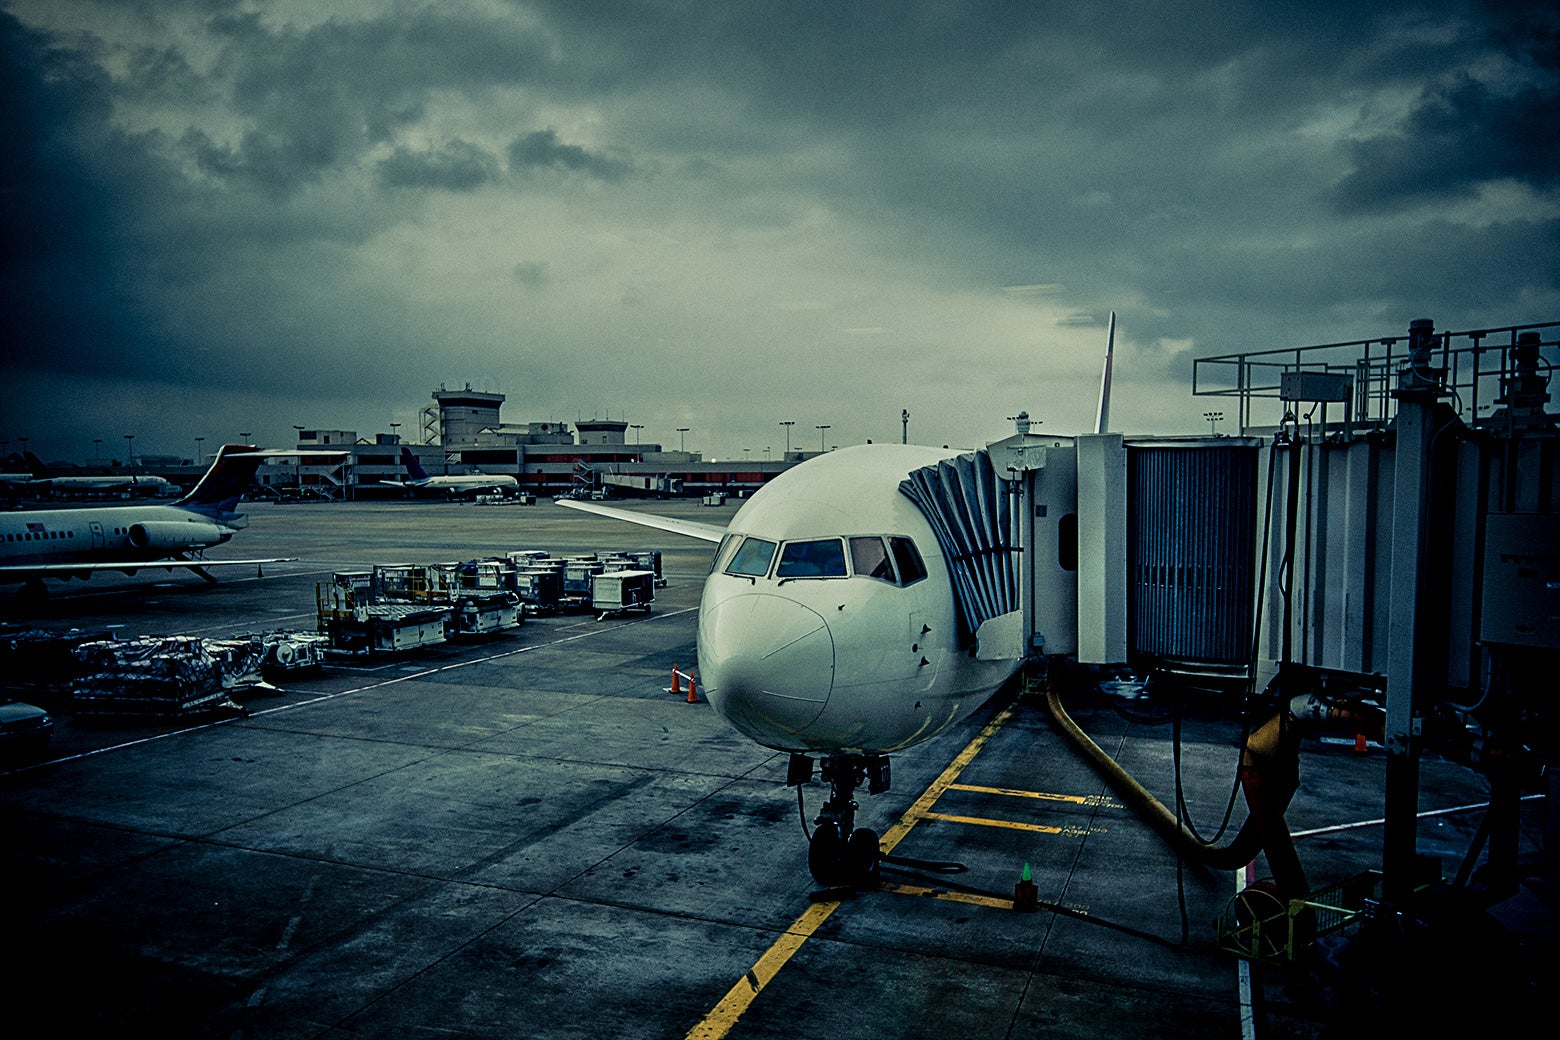 A plane awaits boarding at an airport gate. 